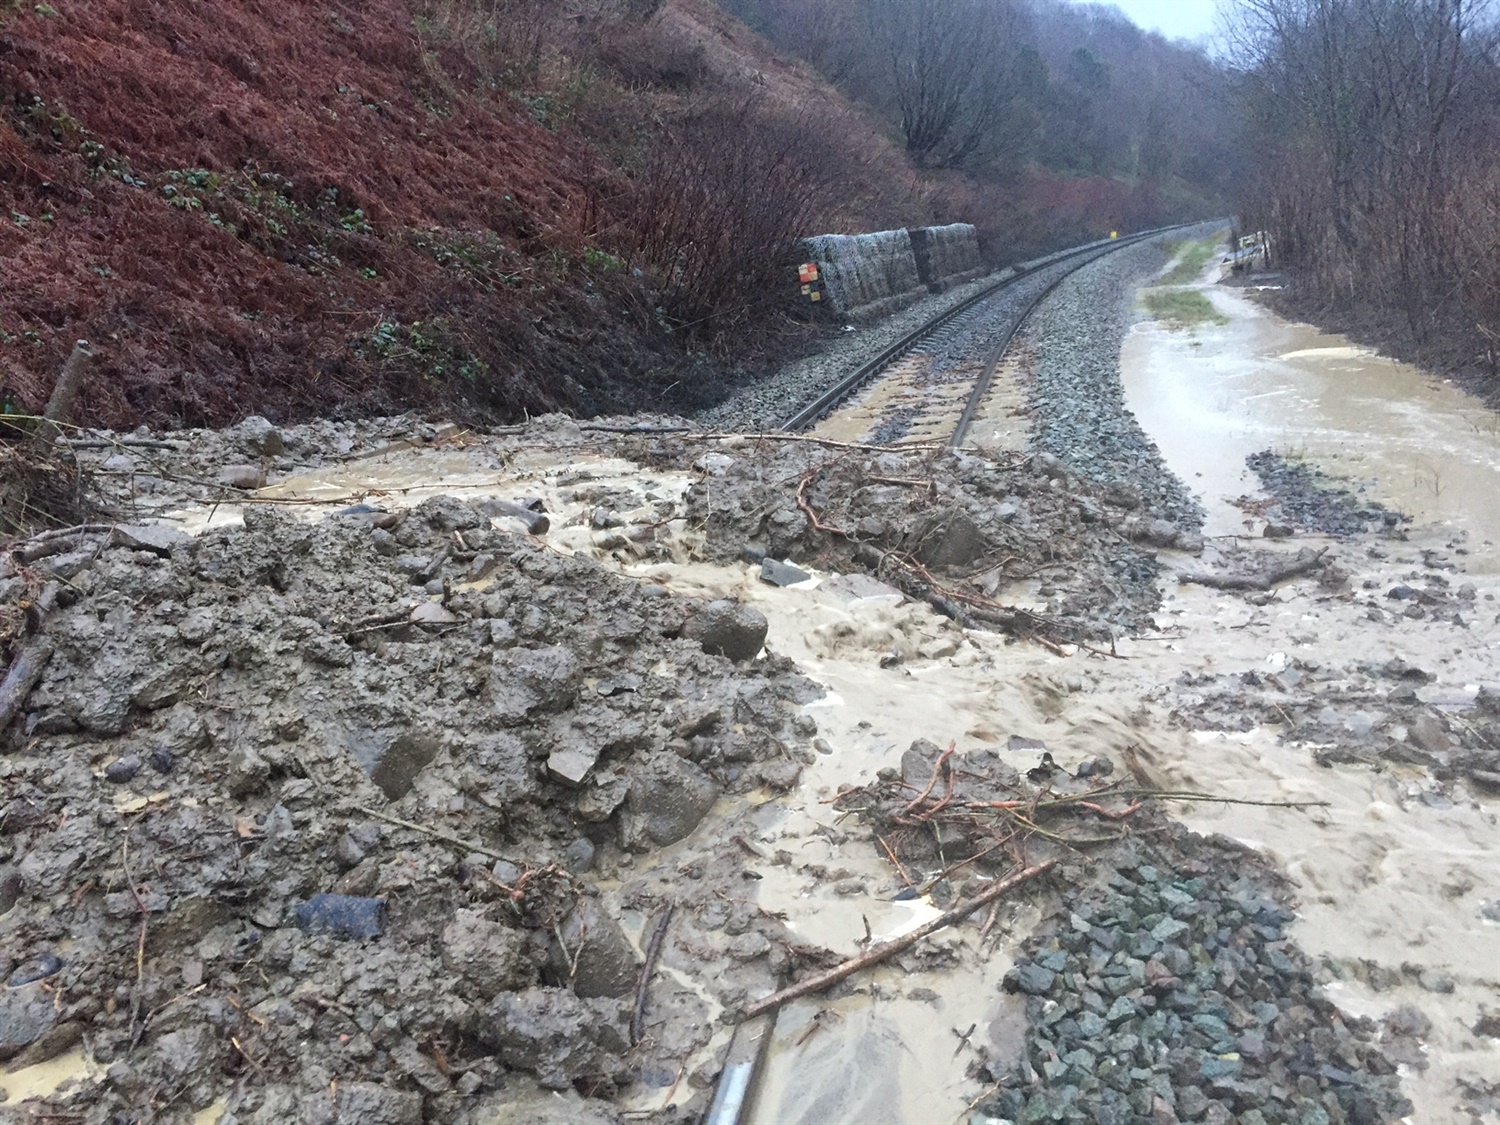 Weekend of heavy rain causes landslide chaos across the UK